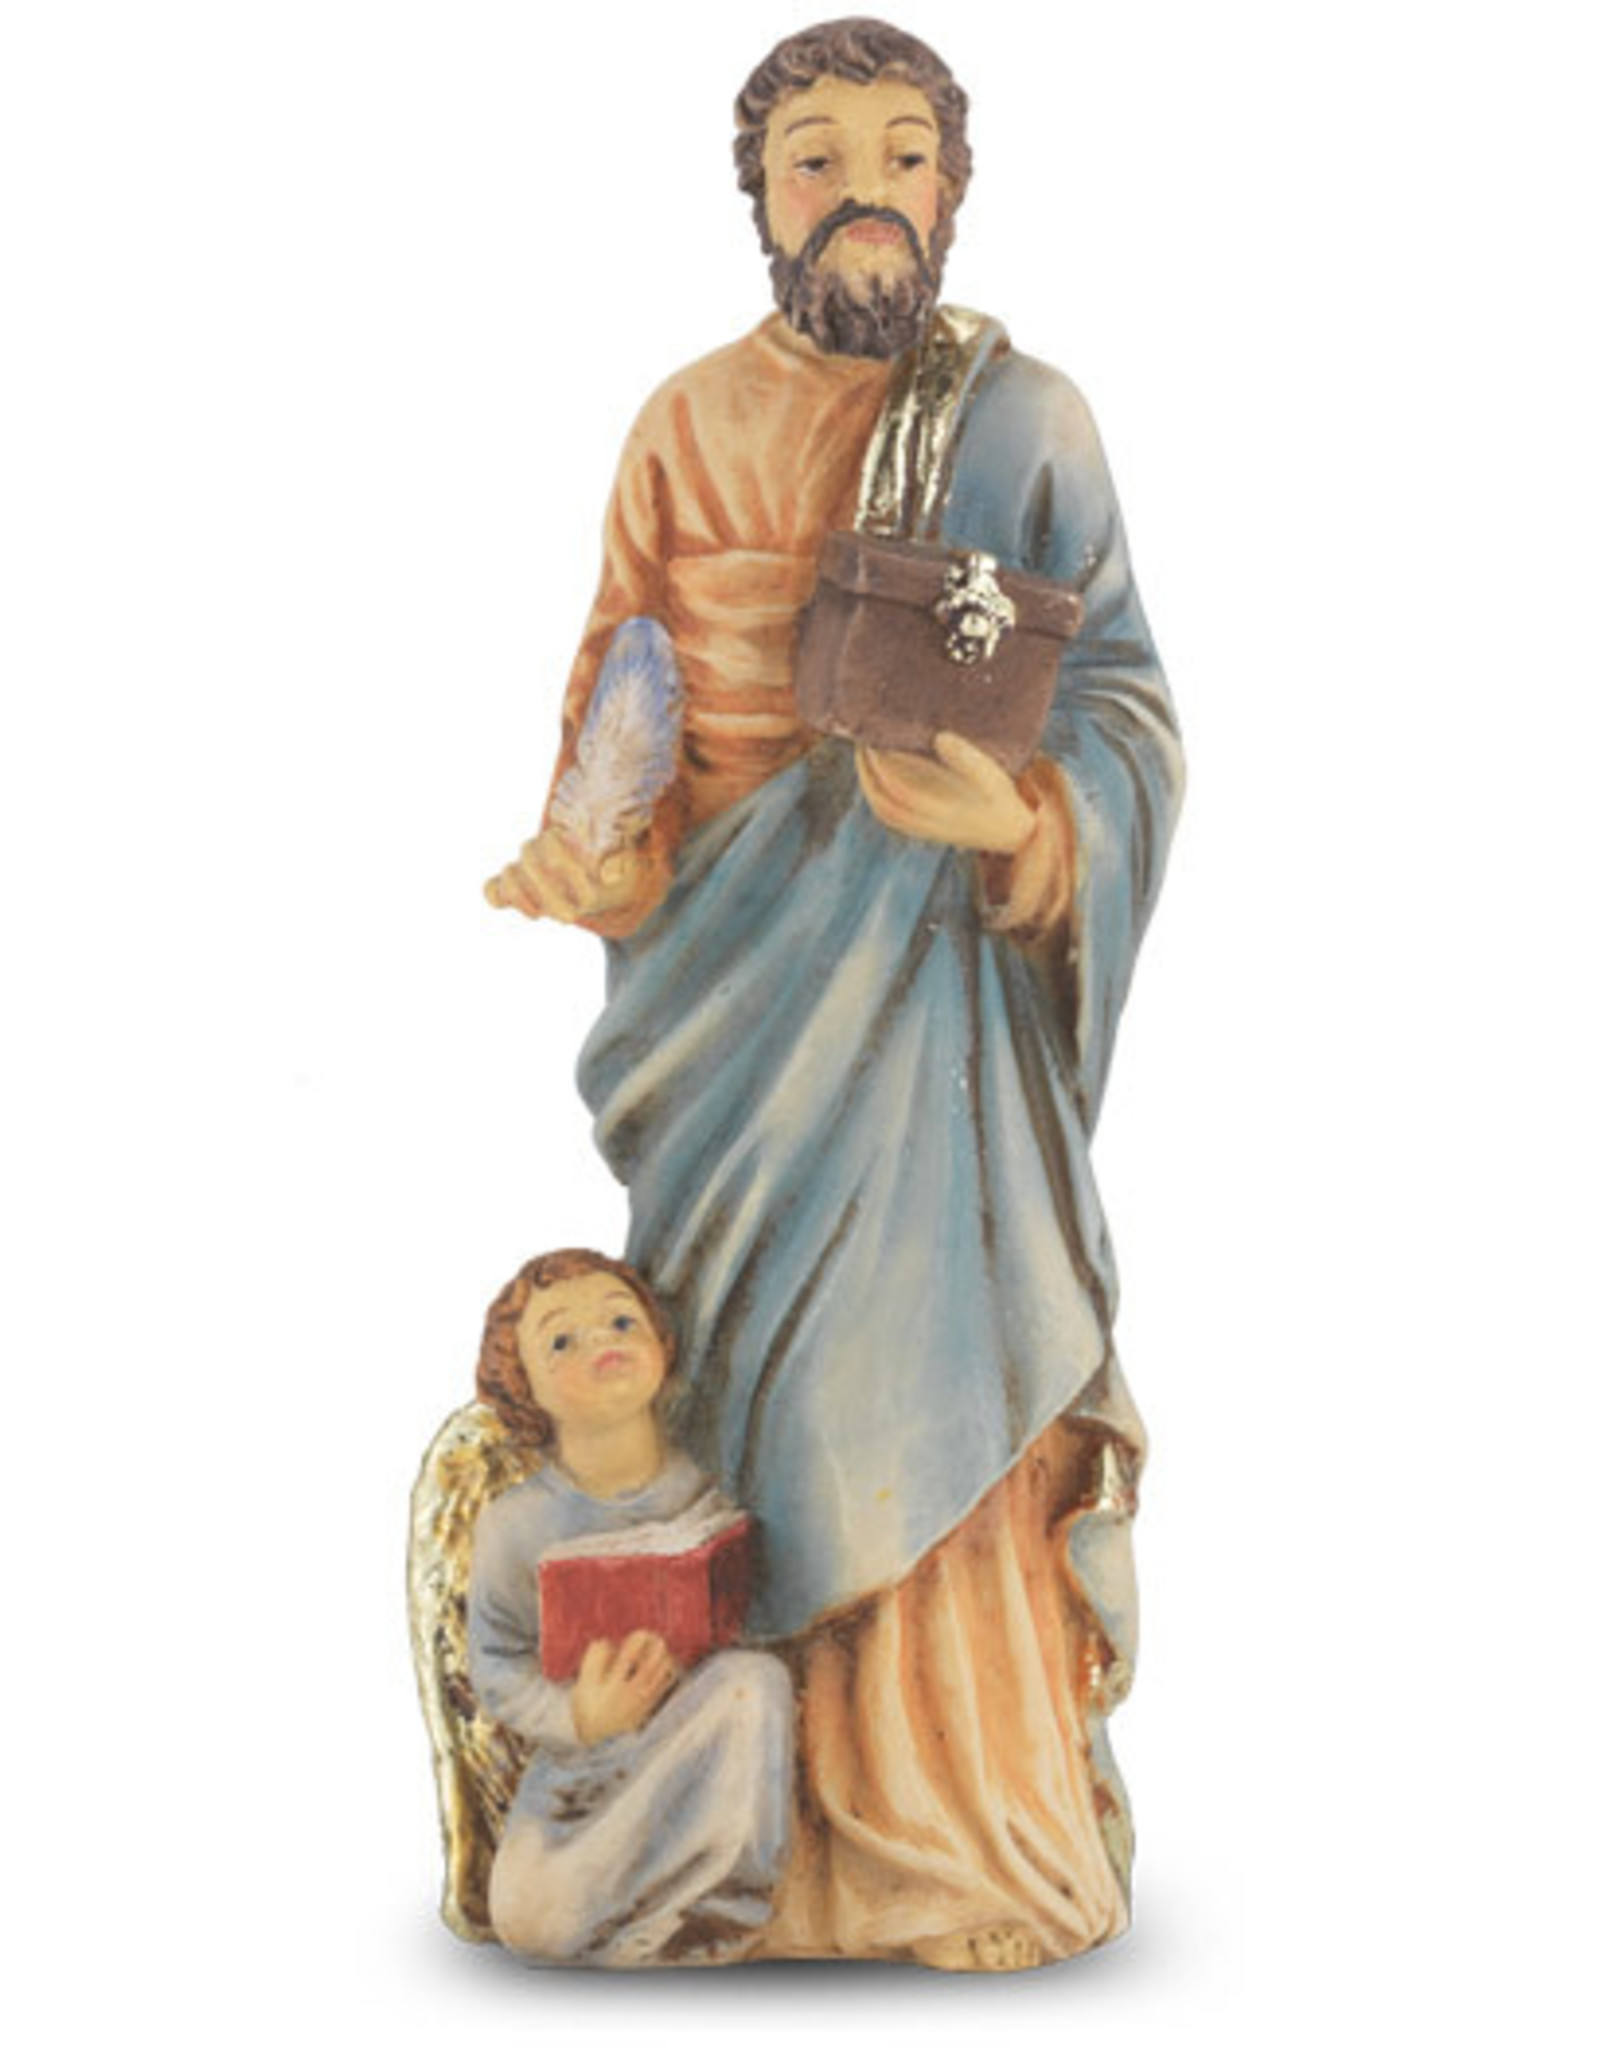 Hirten Patron Saint Statue - St. Matthew